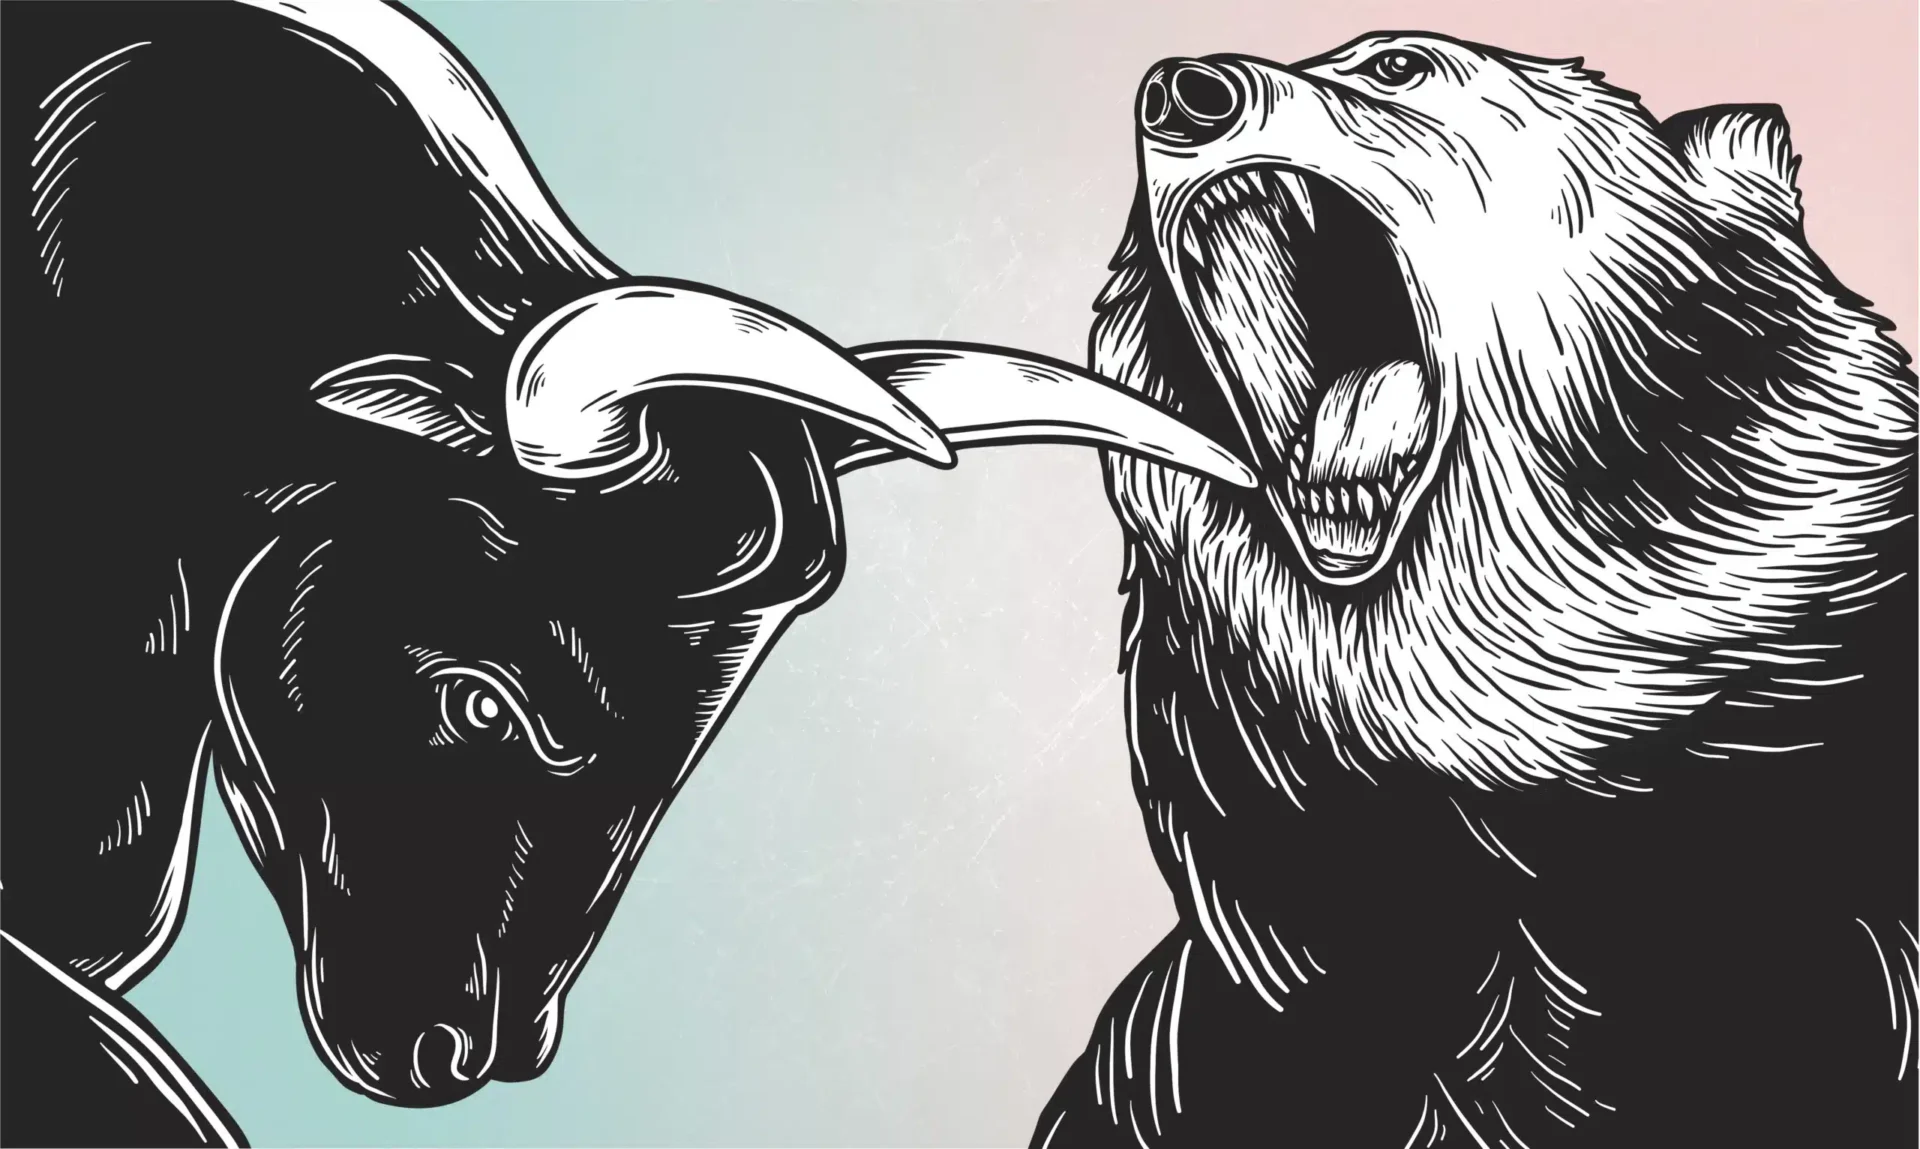 bull bear market